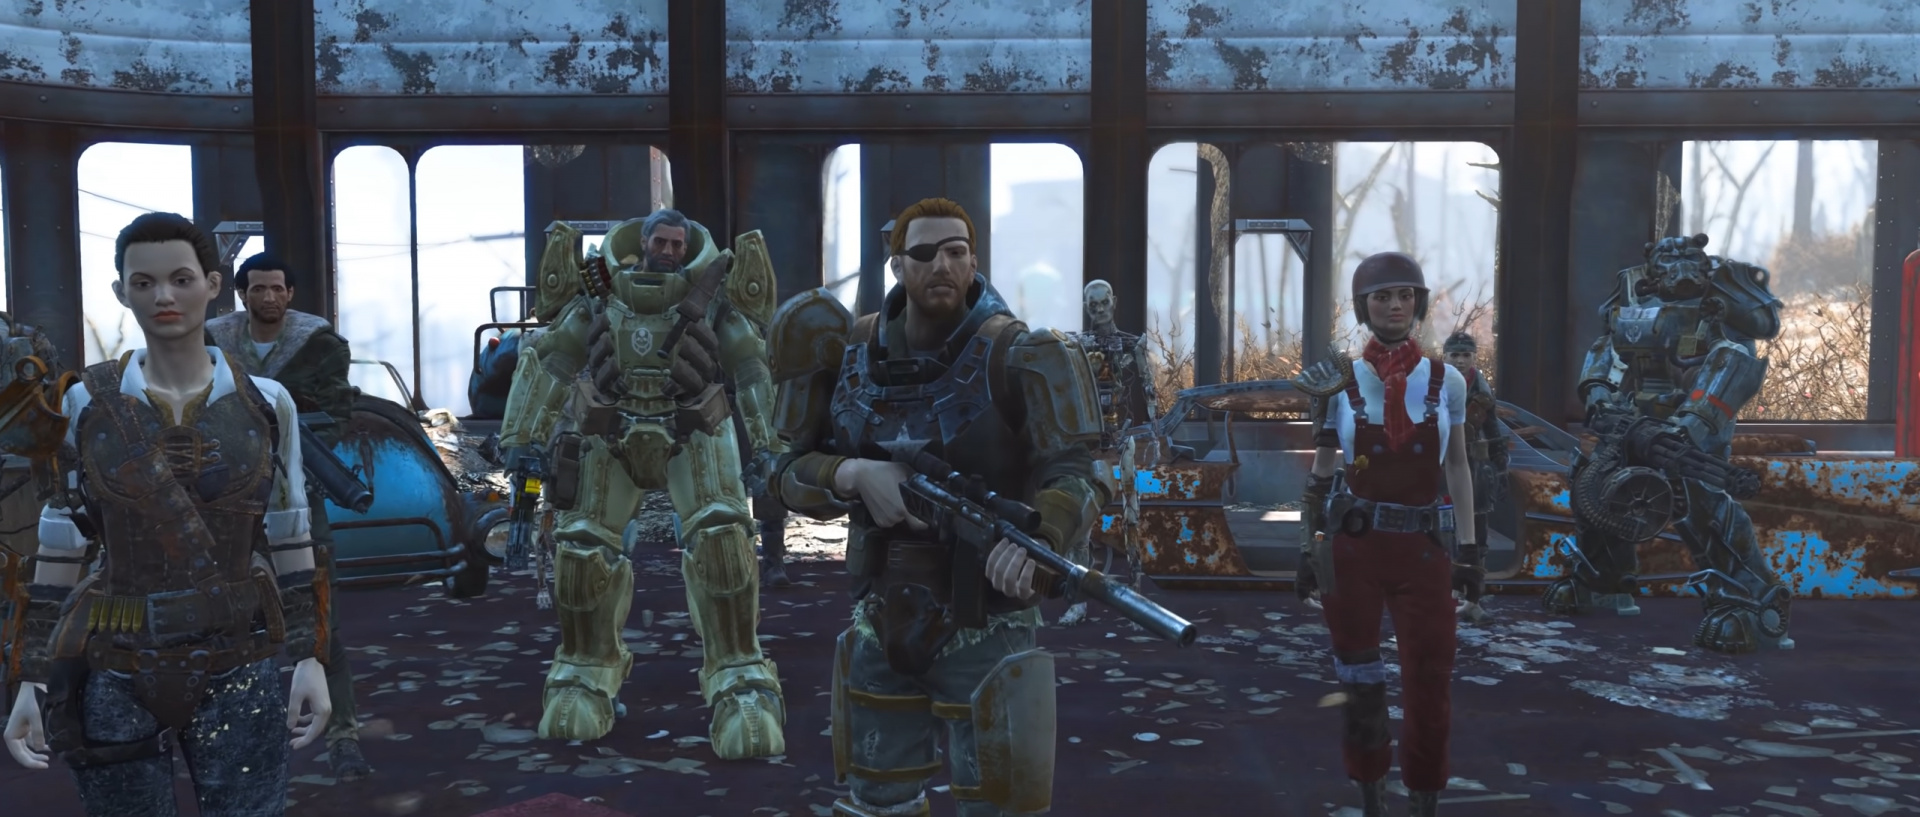 Fallout 4 sim settlements 2 квесты фото 2